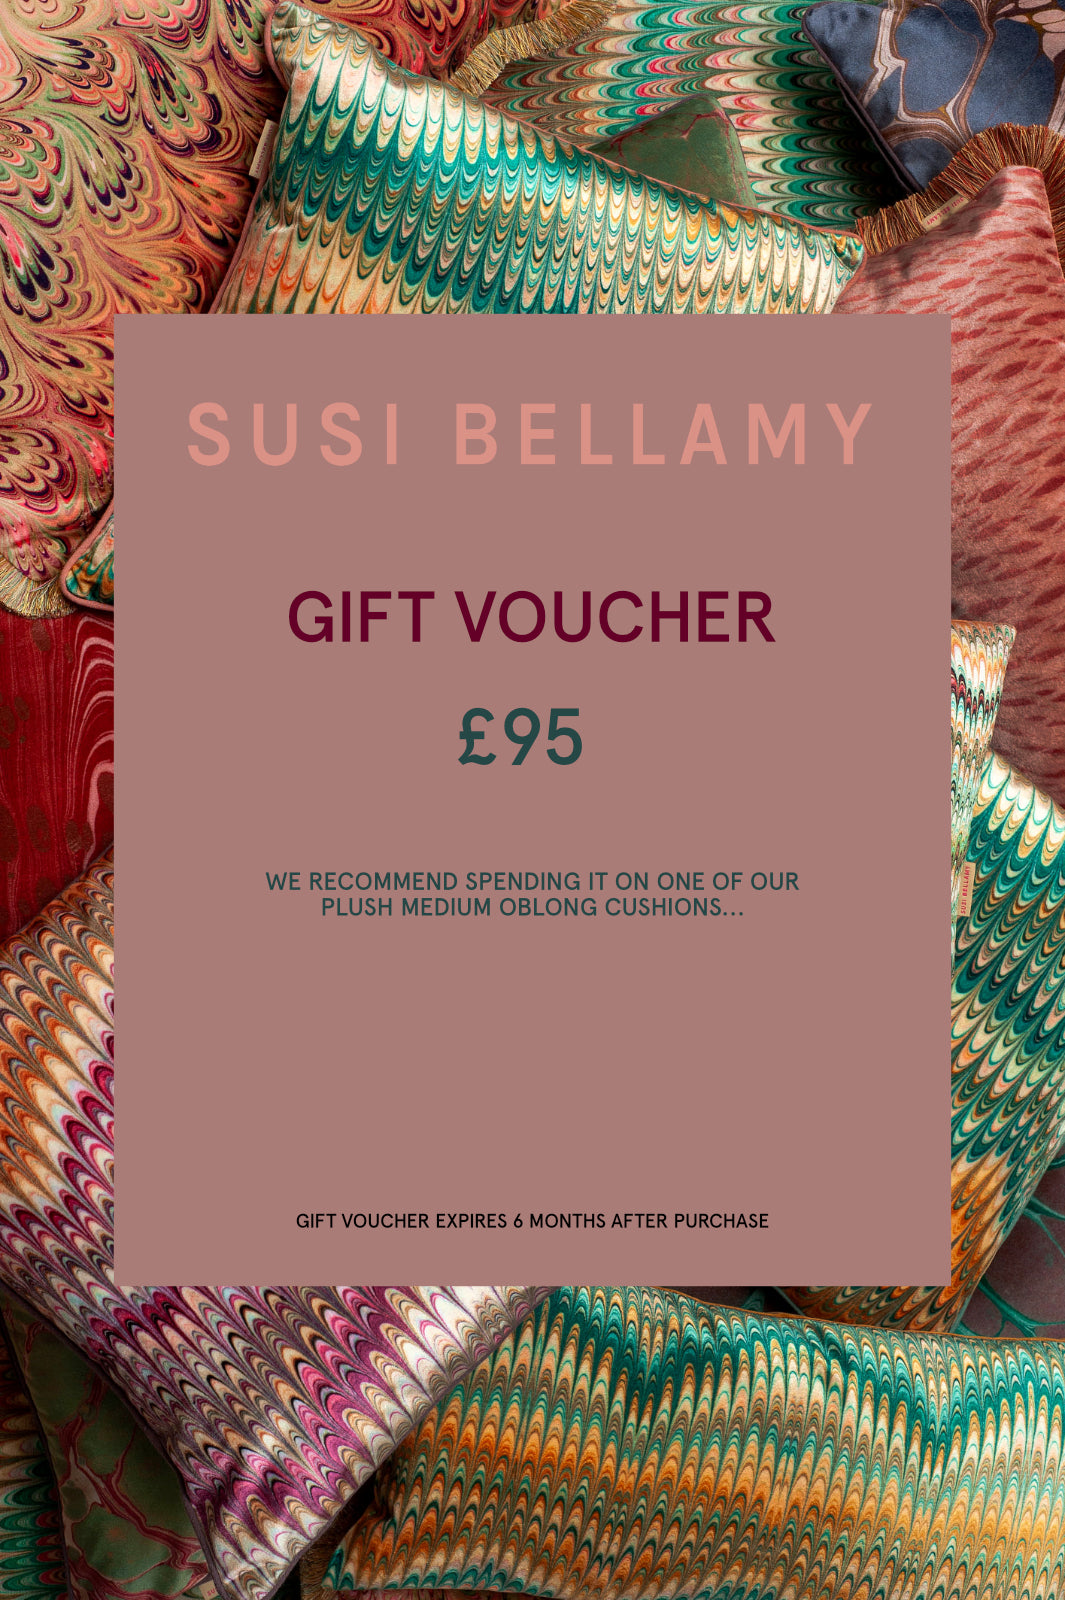 Susi Bellamy Gift Voucher for £95